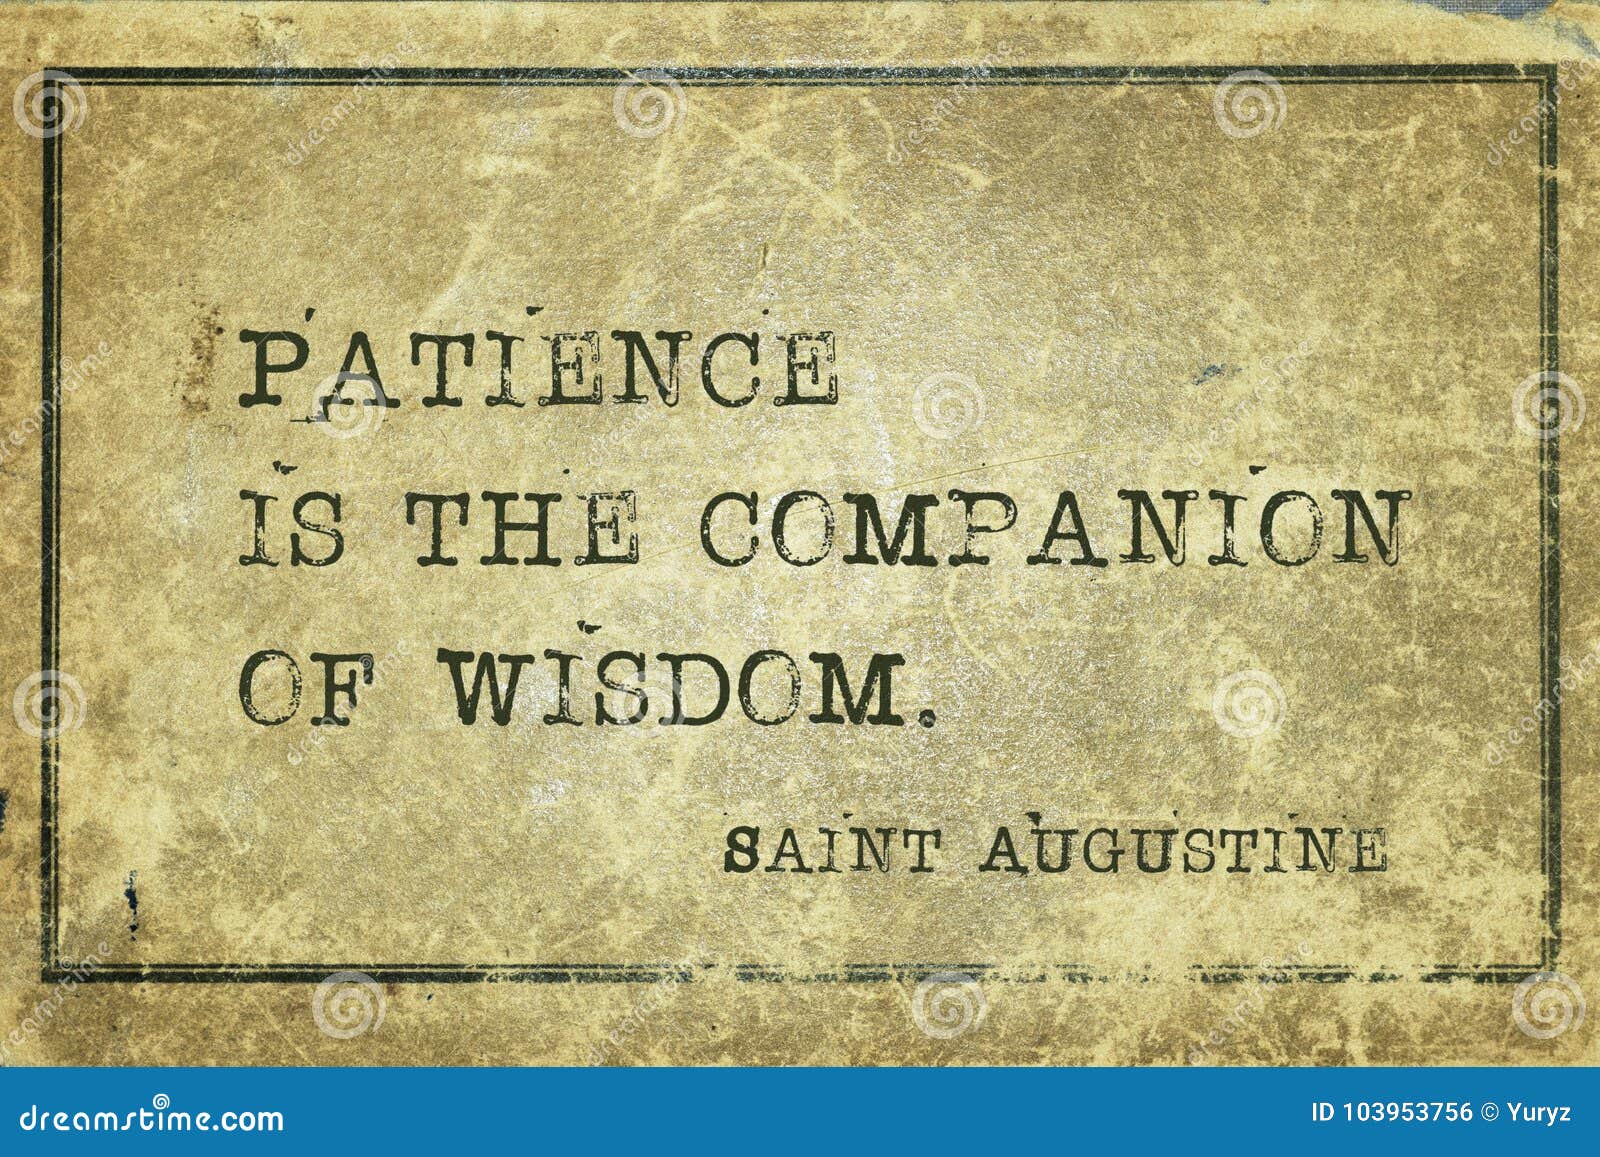 patience is saint augustine